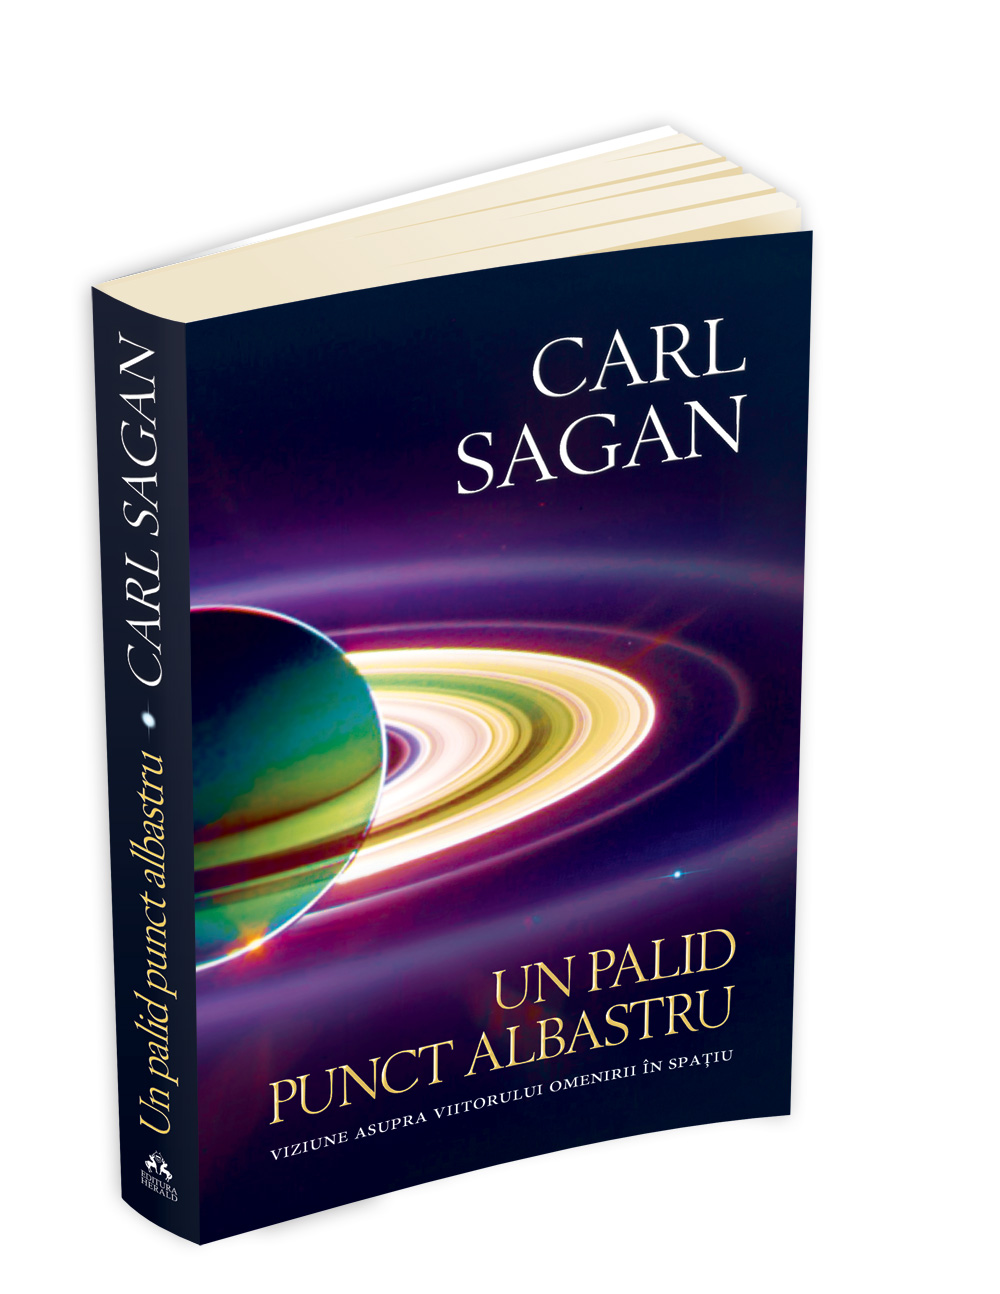 Un palid punct albastru | Carl Sagan carturesti.ro poza bestsellers.ro